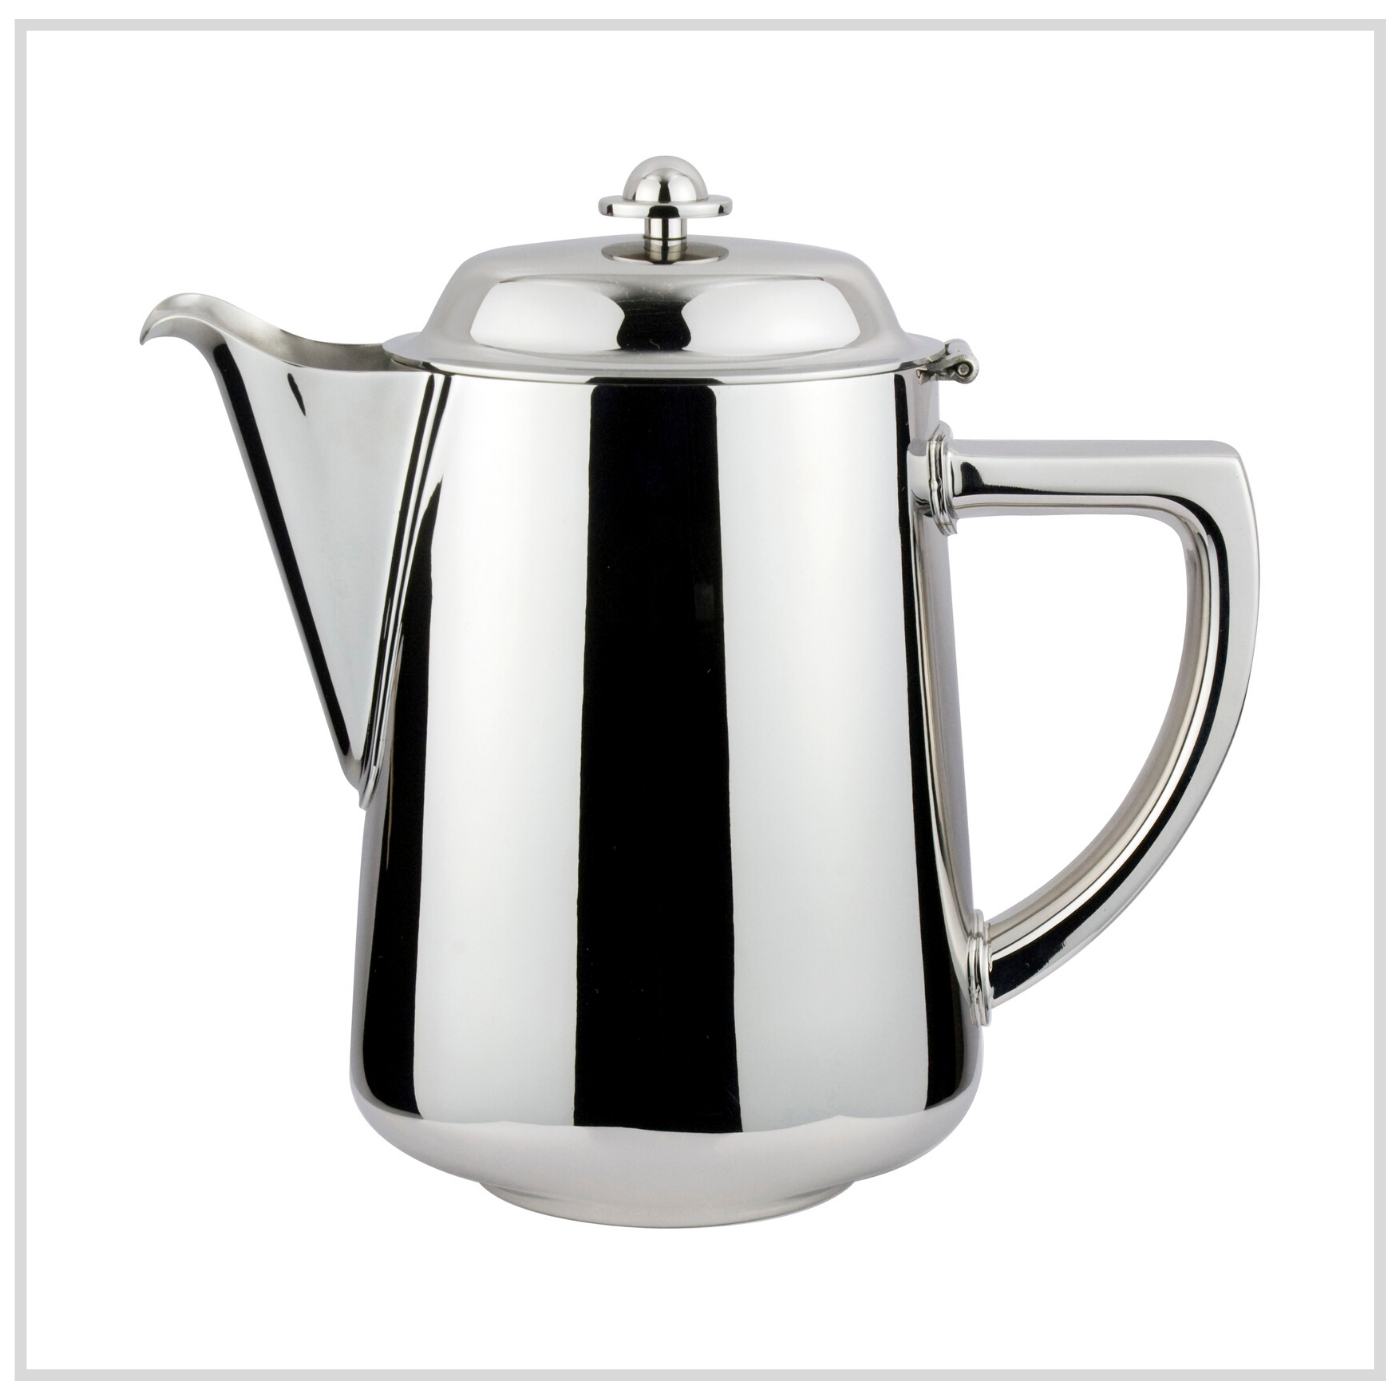 Ilsa Impero Coffee Pot - 10 Cup